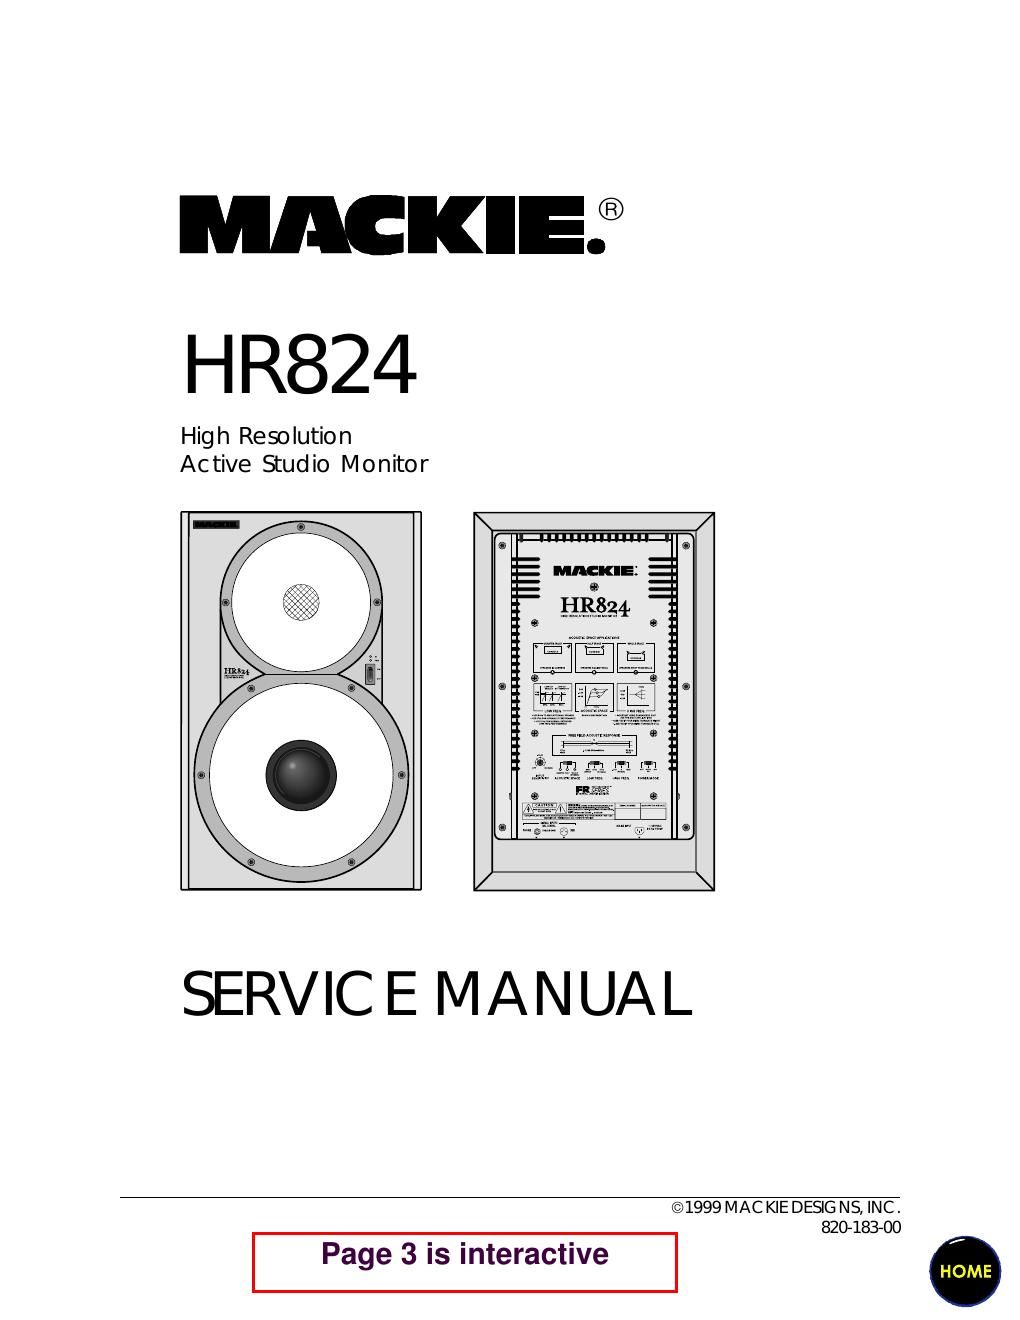 Mackie HR824 actspk